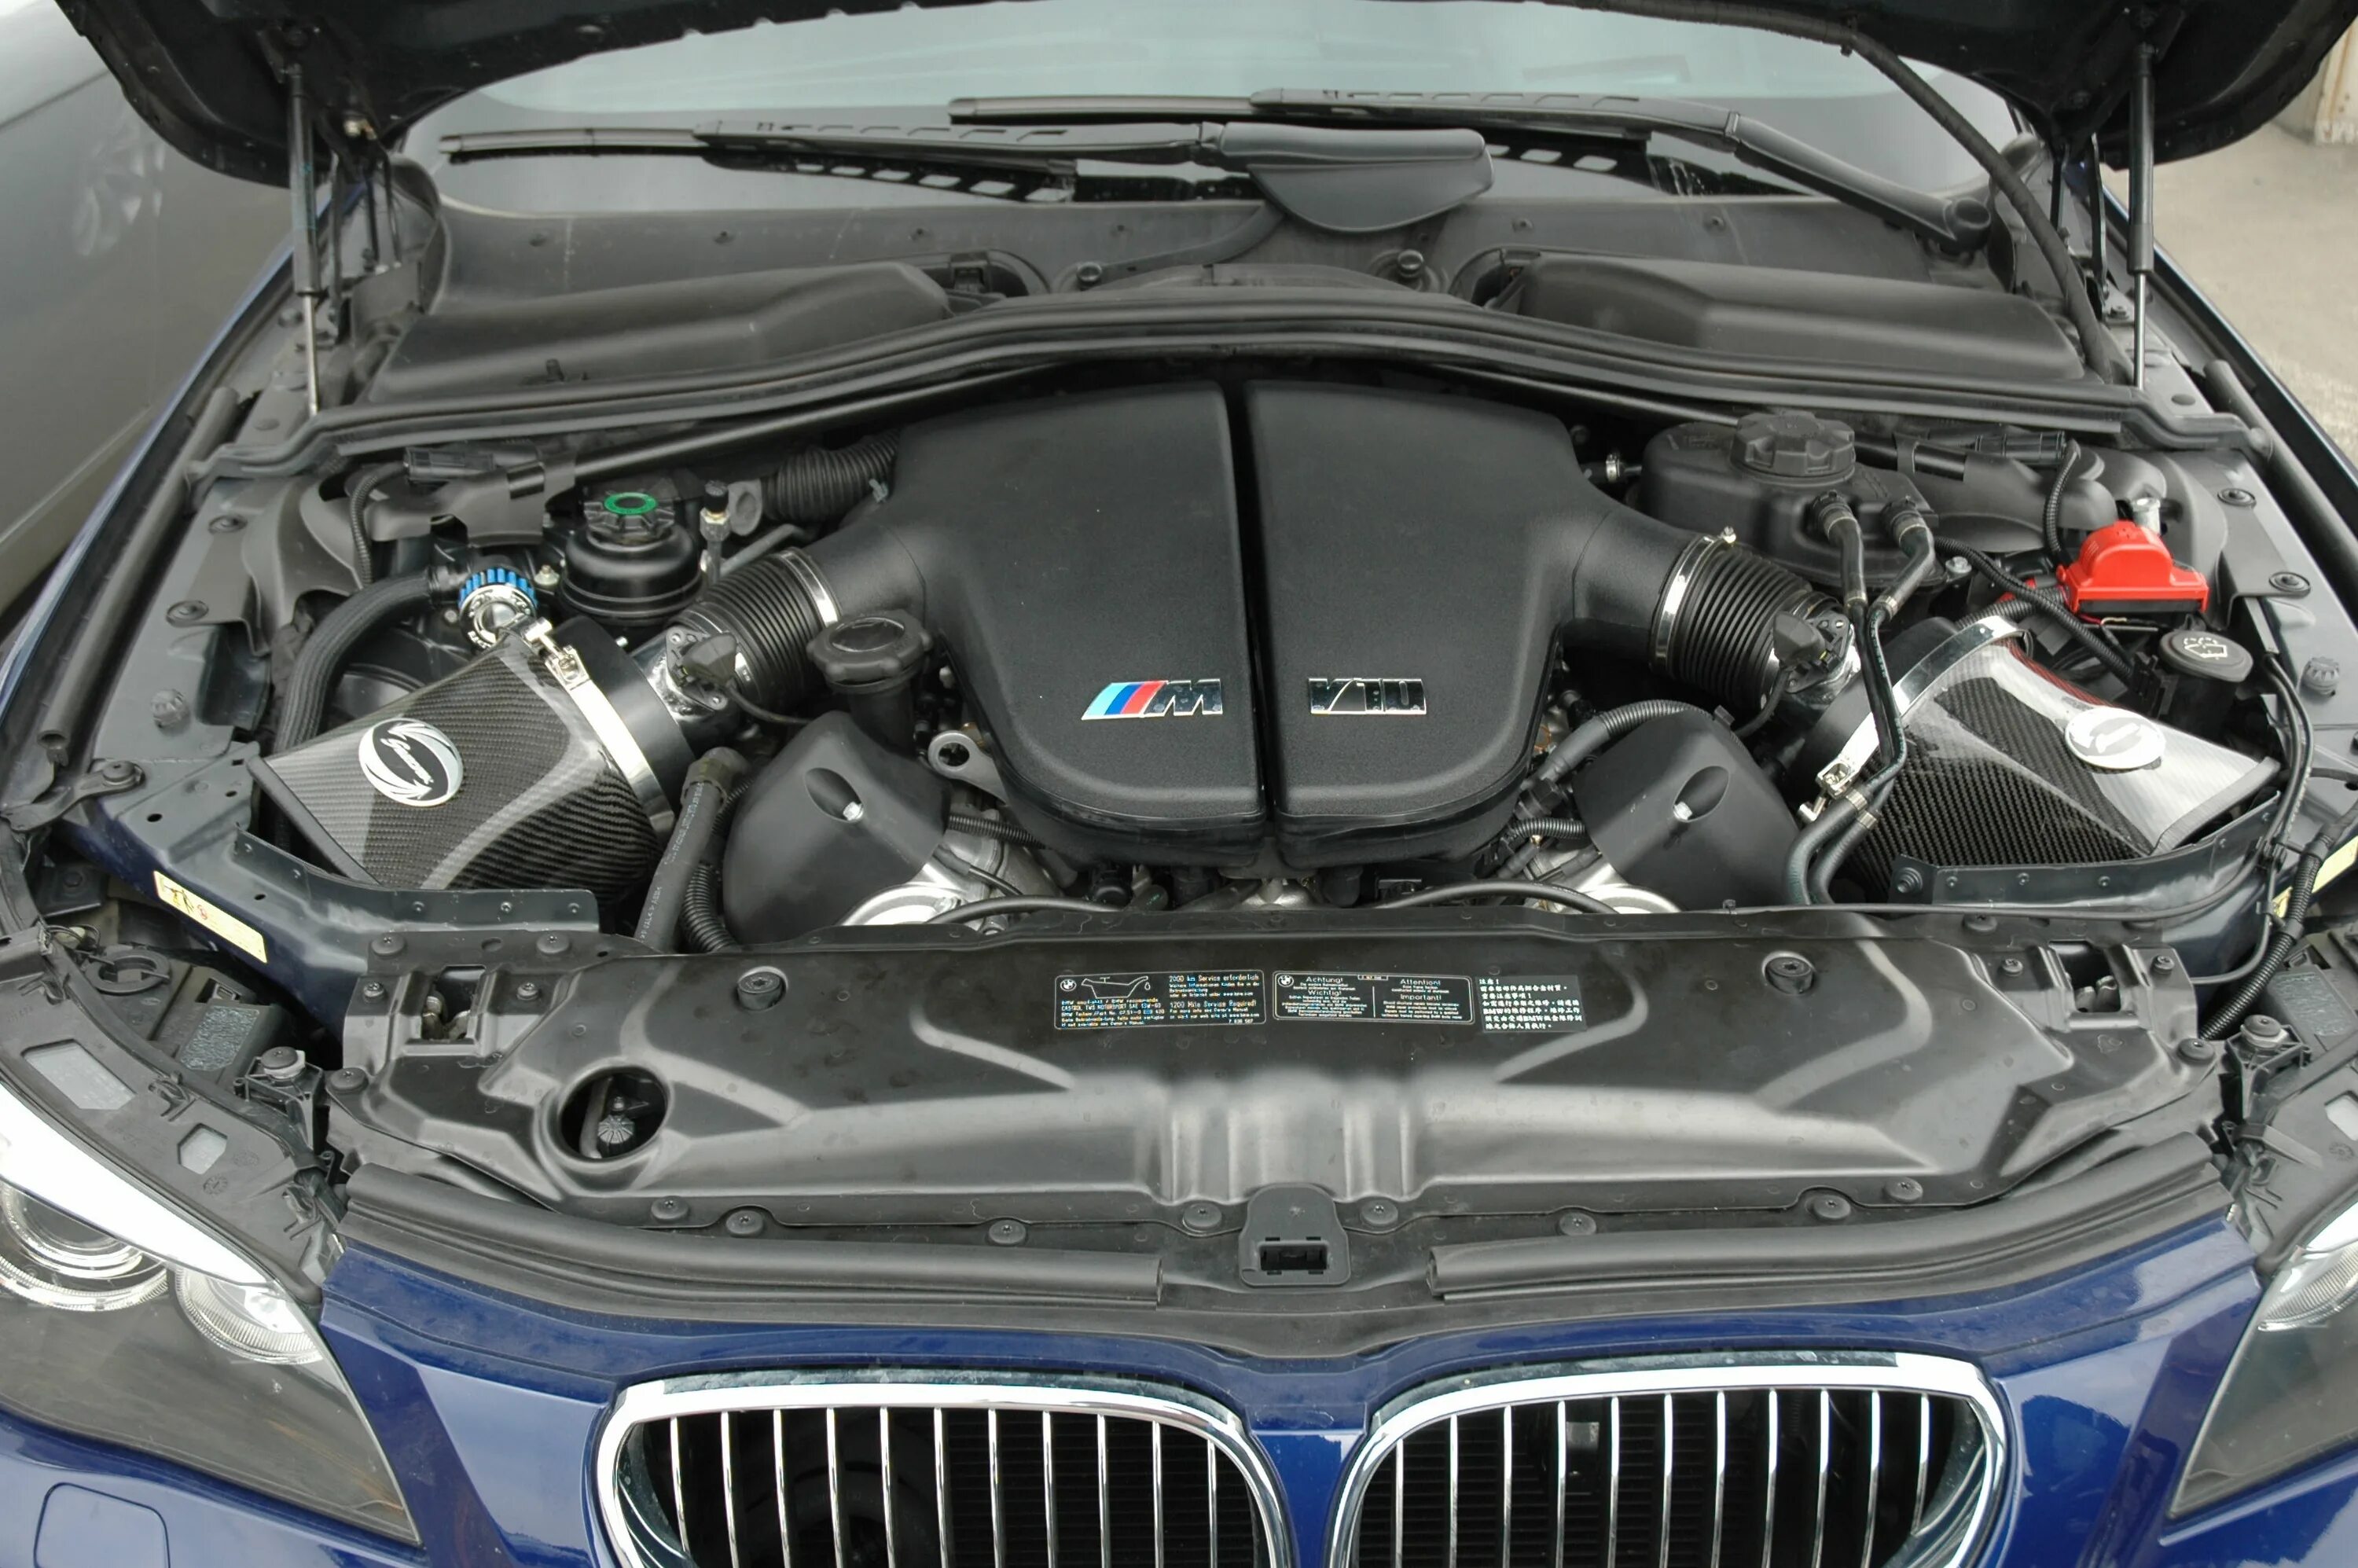 BMW m5 e60 мотор. V10 BMW m5 мотор. БМВ м5 е60 двигатель v10. BMW m5 e60 двигатель v10. Е60 какие моторы